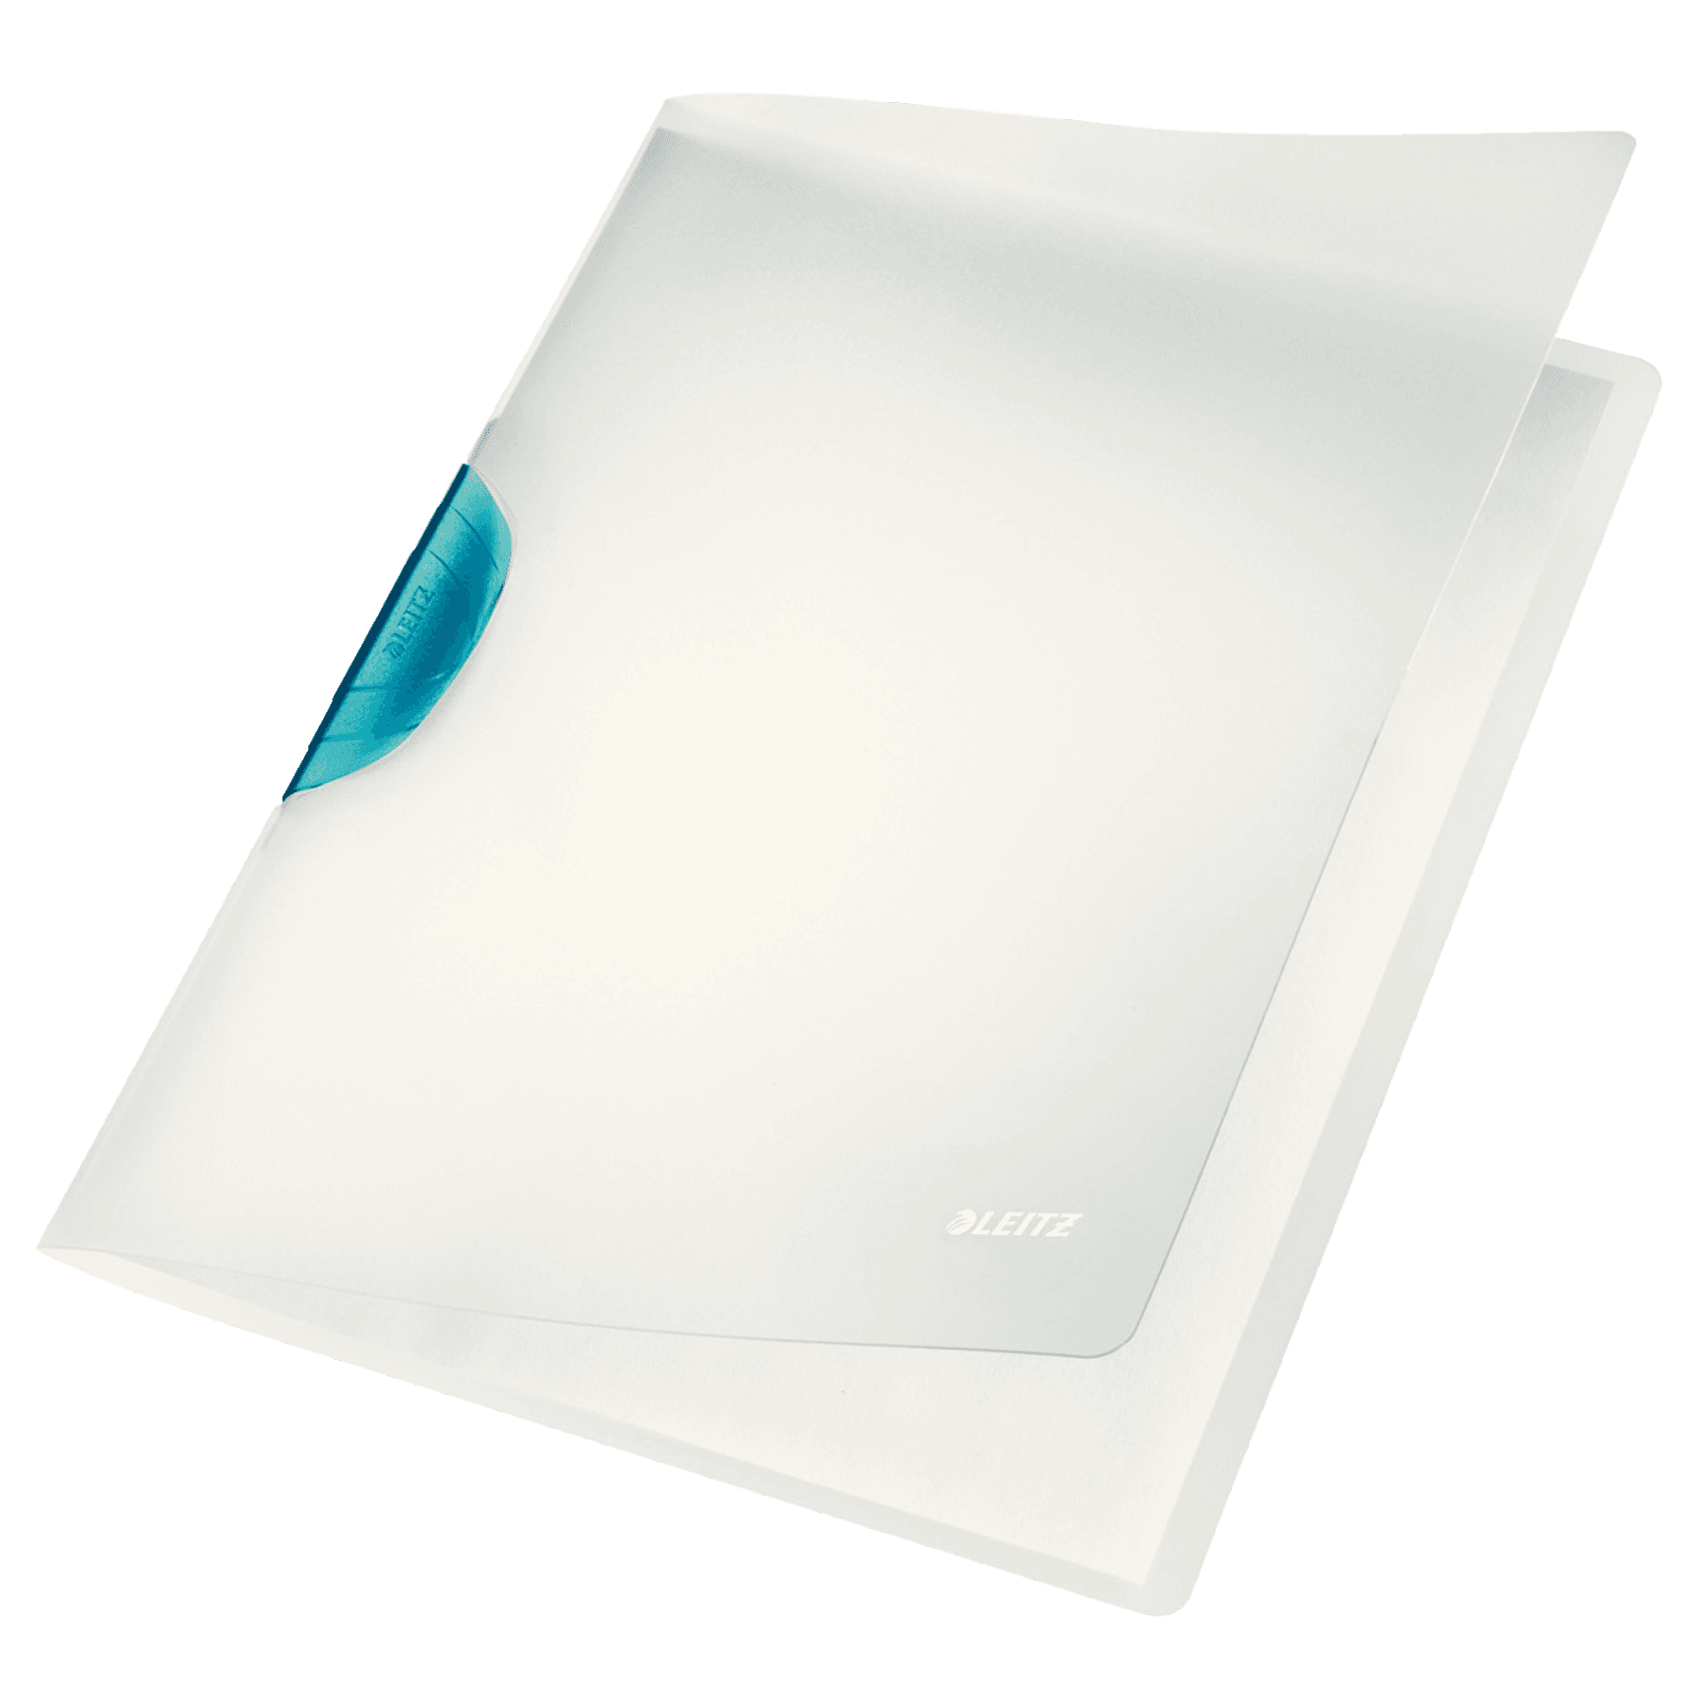 Desky s klipem Leitz ColorClip Magic, světle modrý klip